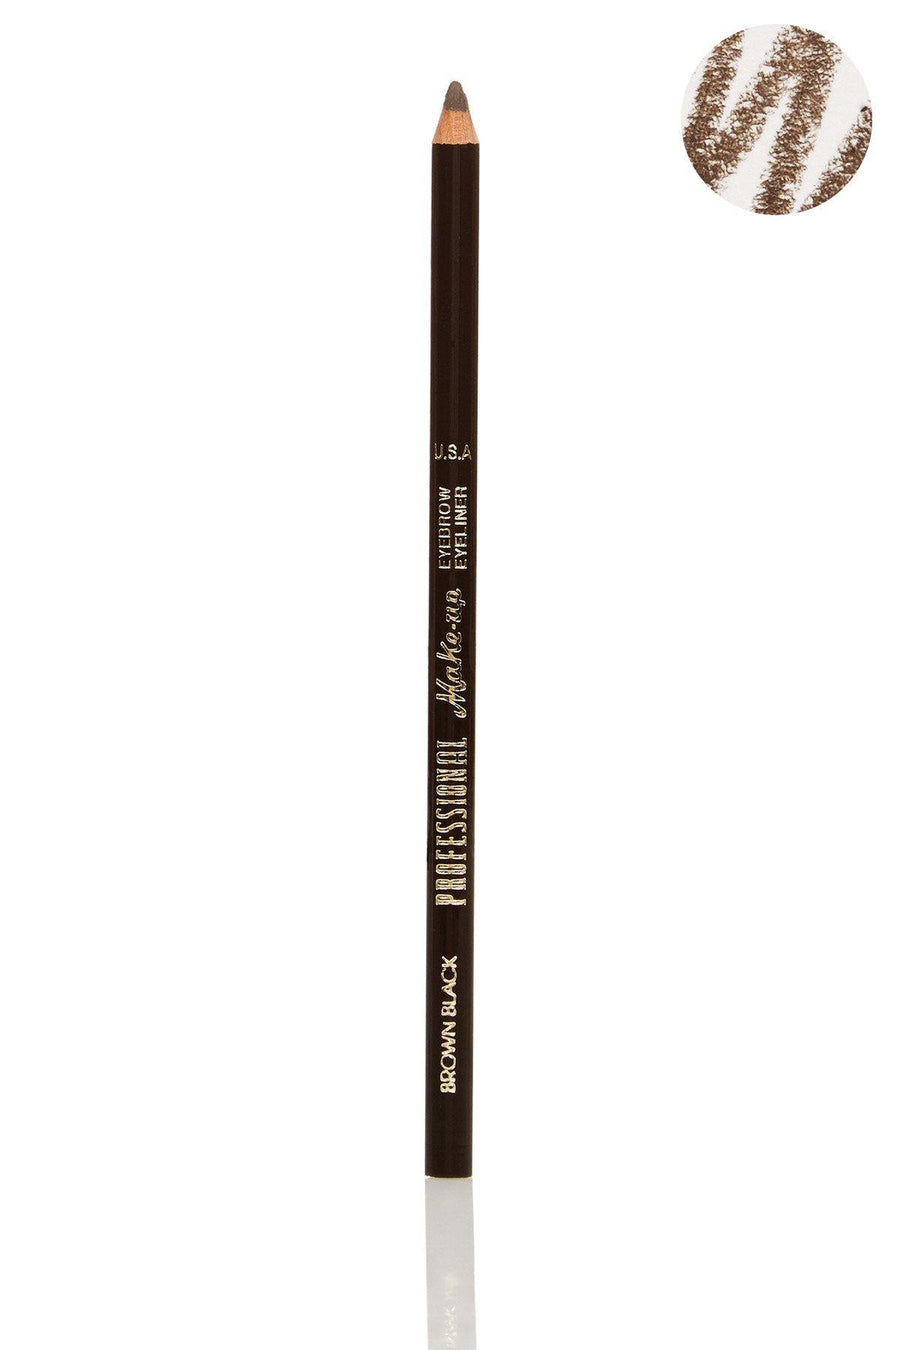 Brown & Black Eyebrow Eyeliner Pencil - Blend Mineral Cosmetics